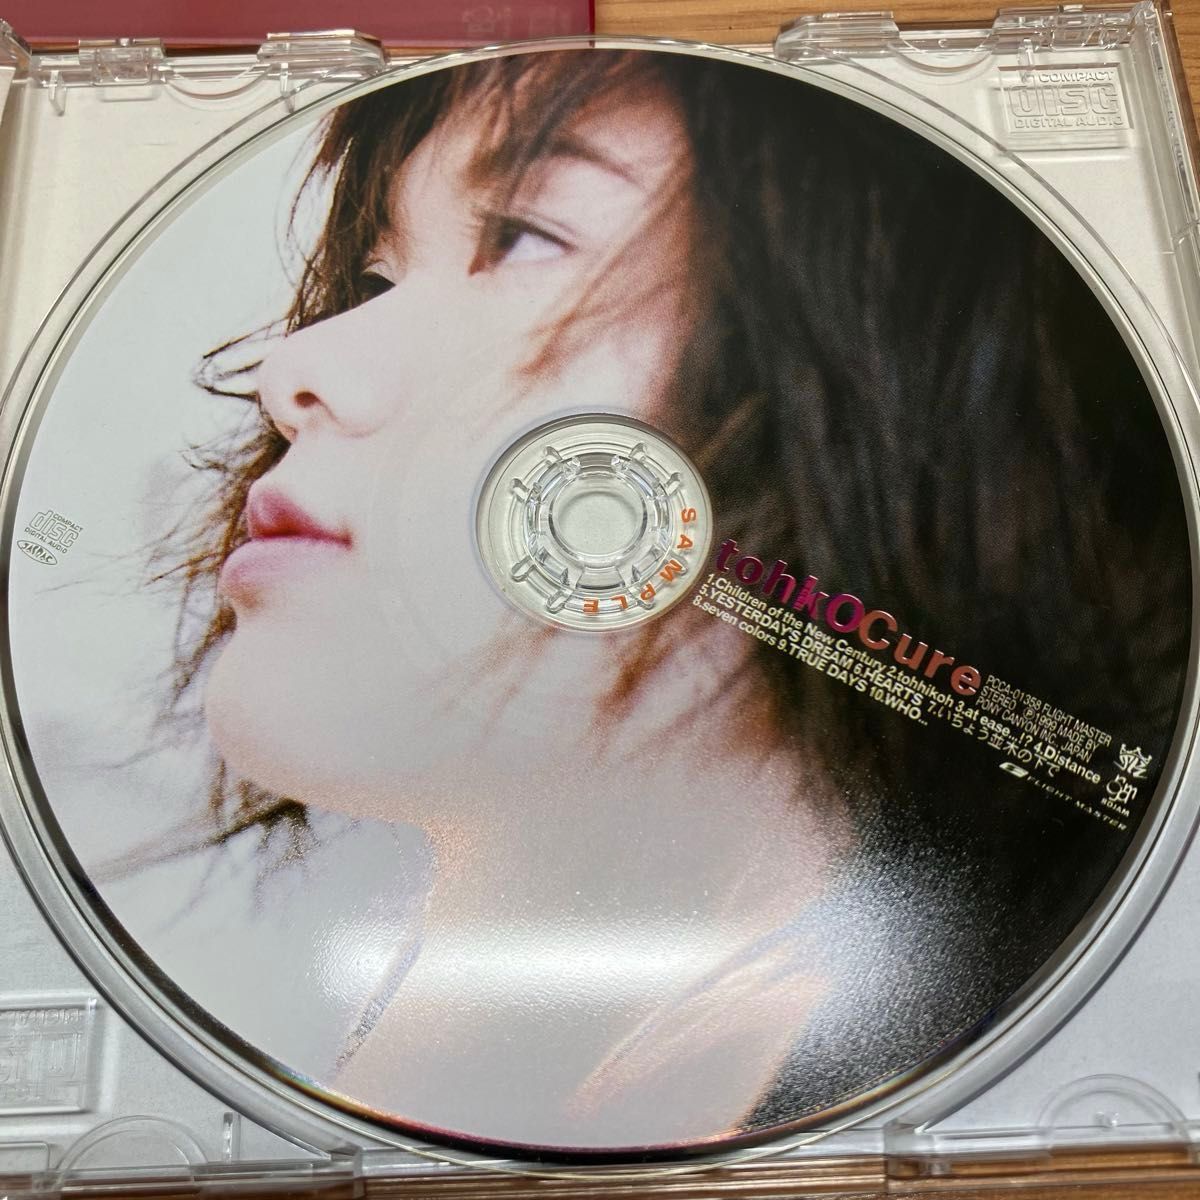 Cure / tohko 小室哲哉プロデュース 音楽CD サンプル盤 アルバム